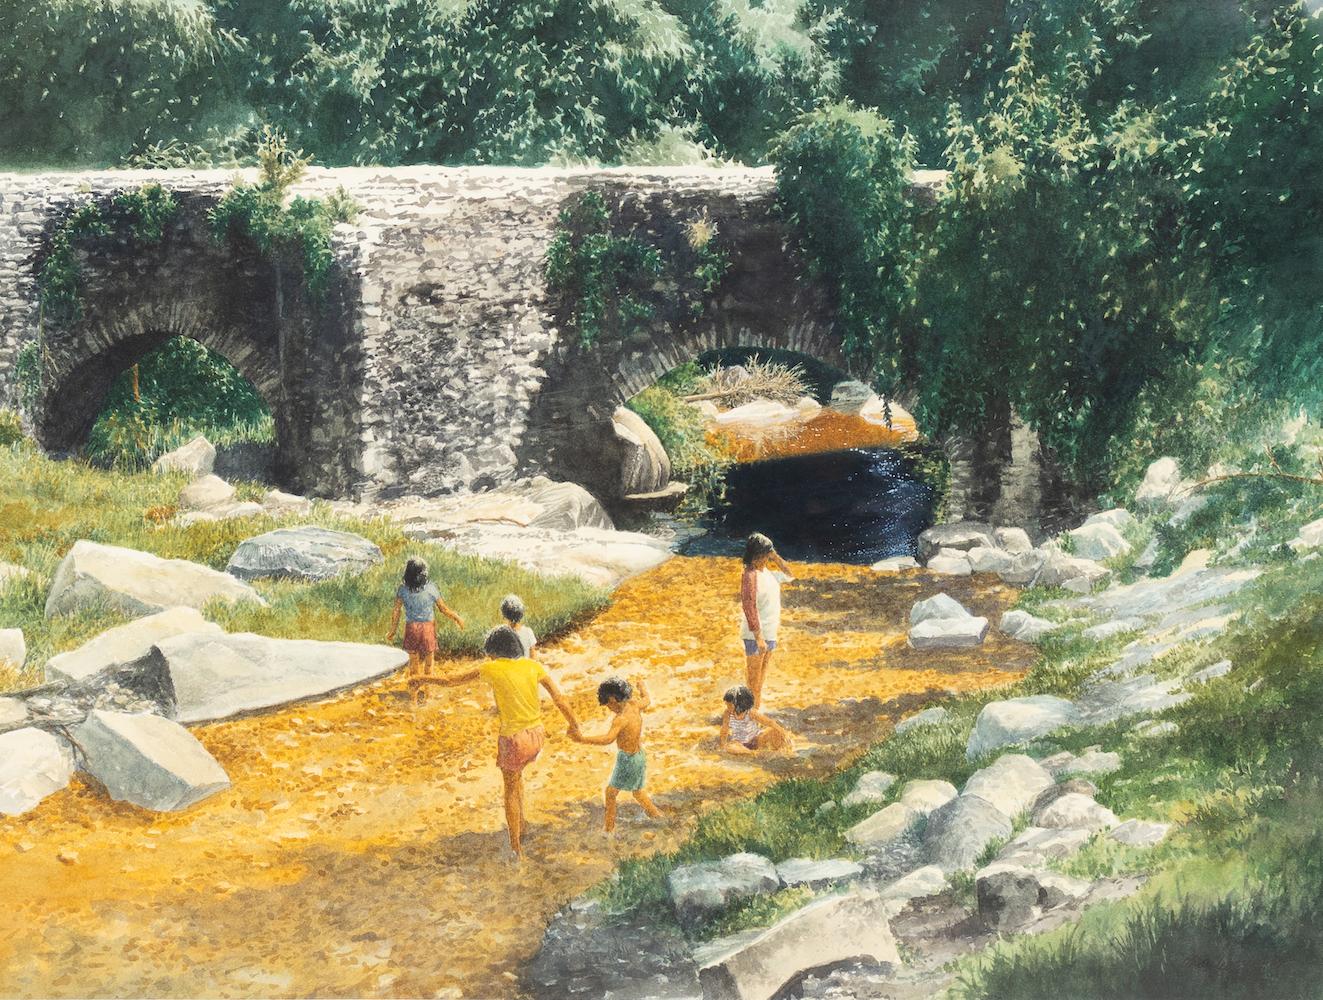 Charles Shaw Landscape Art - "Children in a Creek" Playful Sunny Landscape Water Bridge Forest Rocks Happy